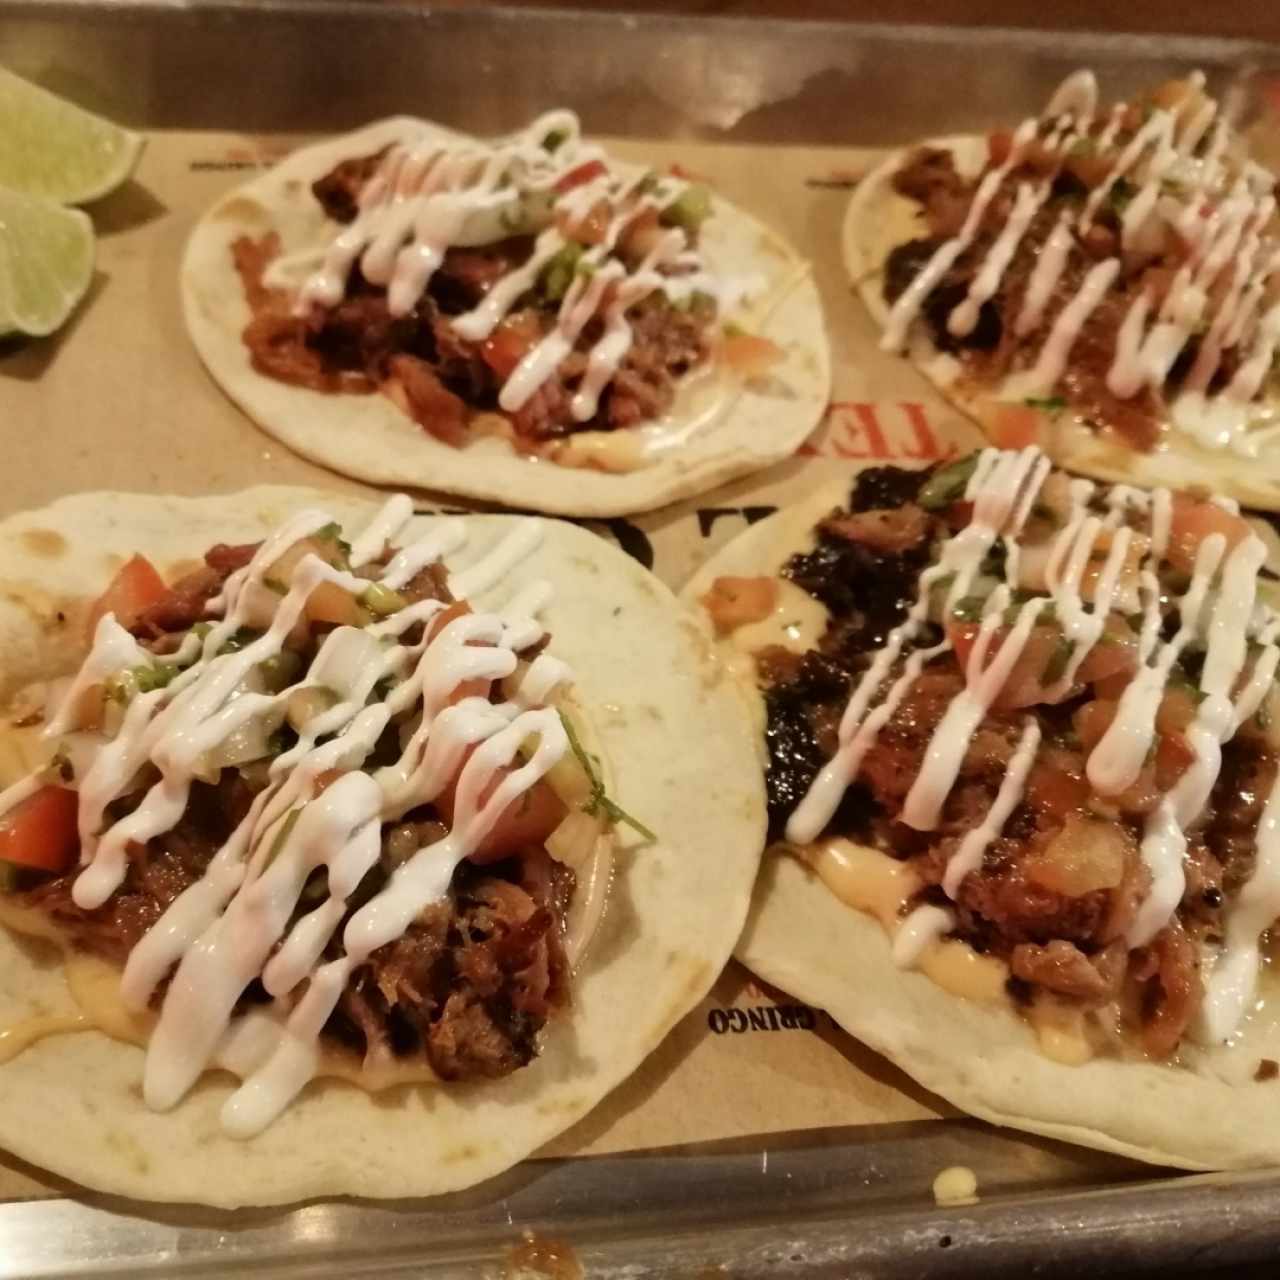 Tex - Mex - Pulled Pork tacos